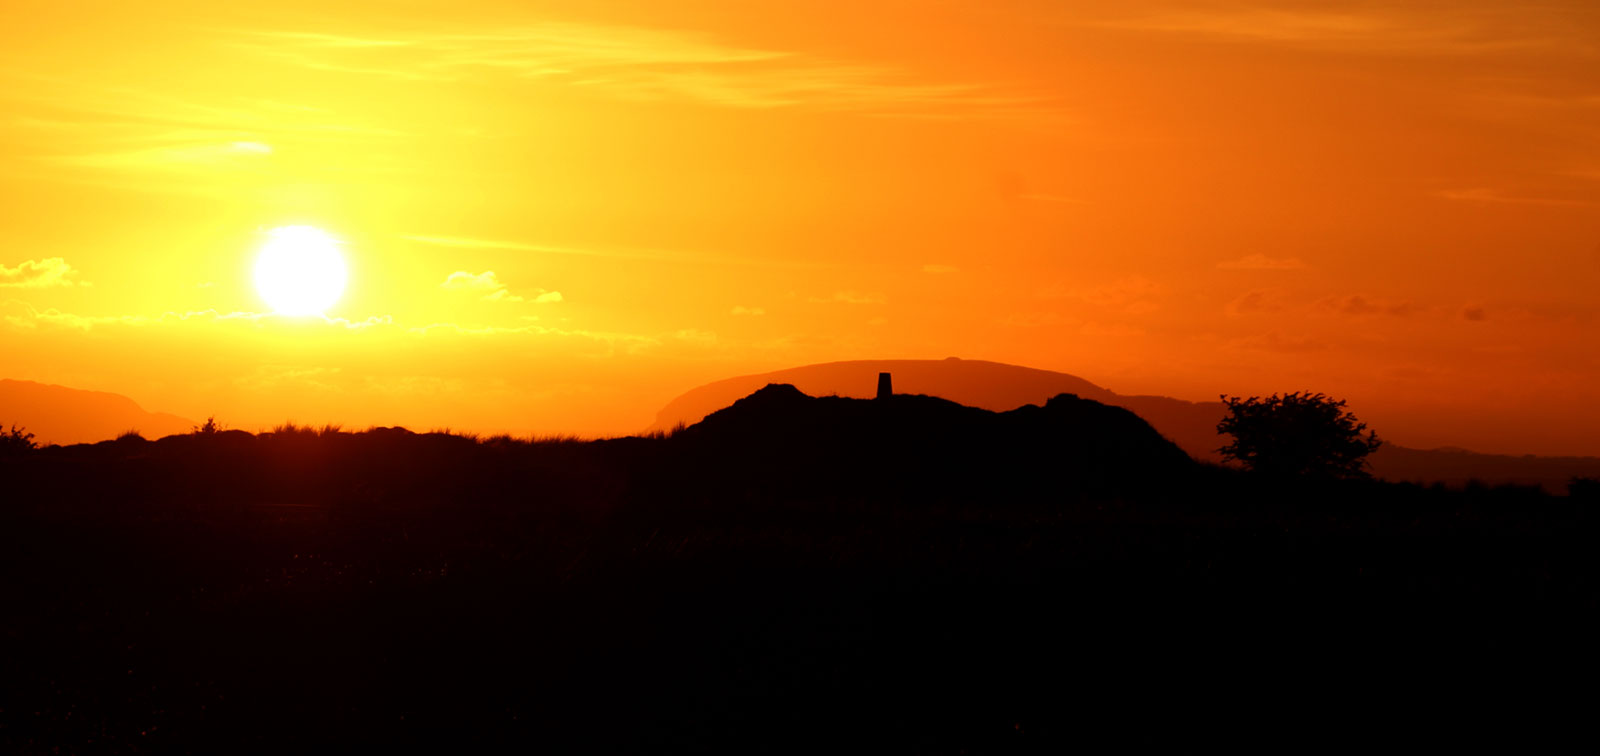 The midsummer sunset viewed from Shee Lugh, Moytura, County Sligo.